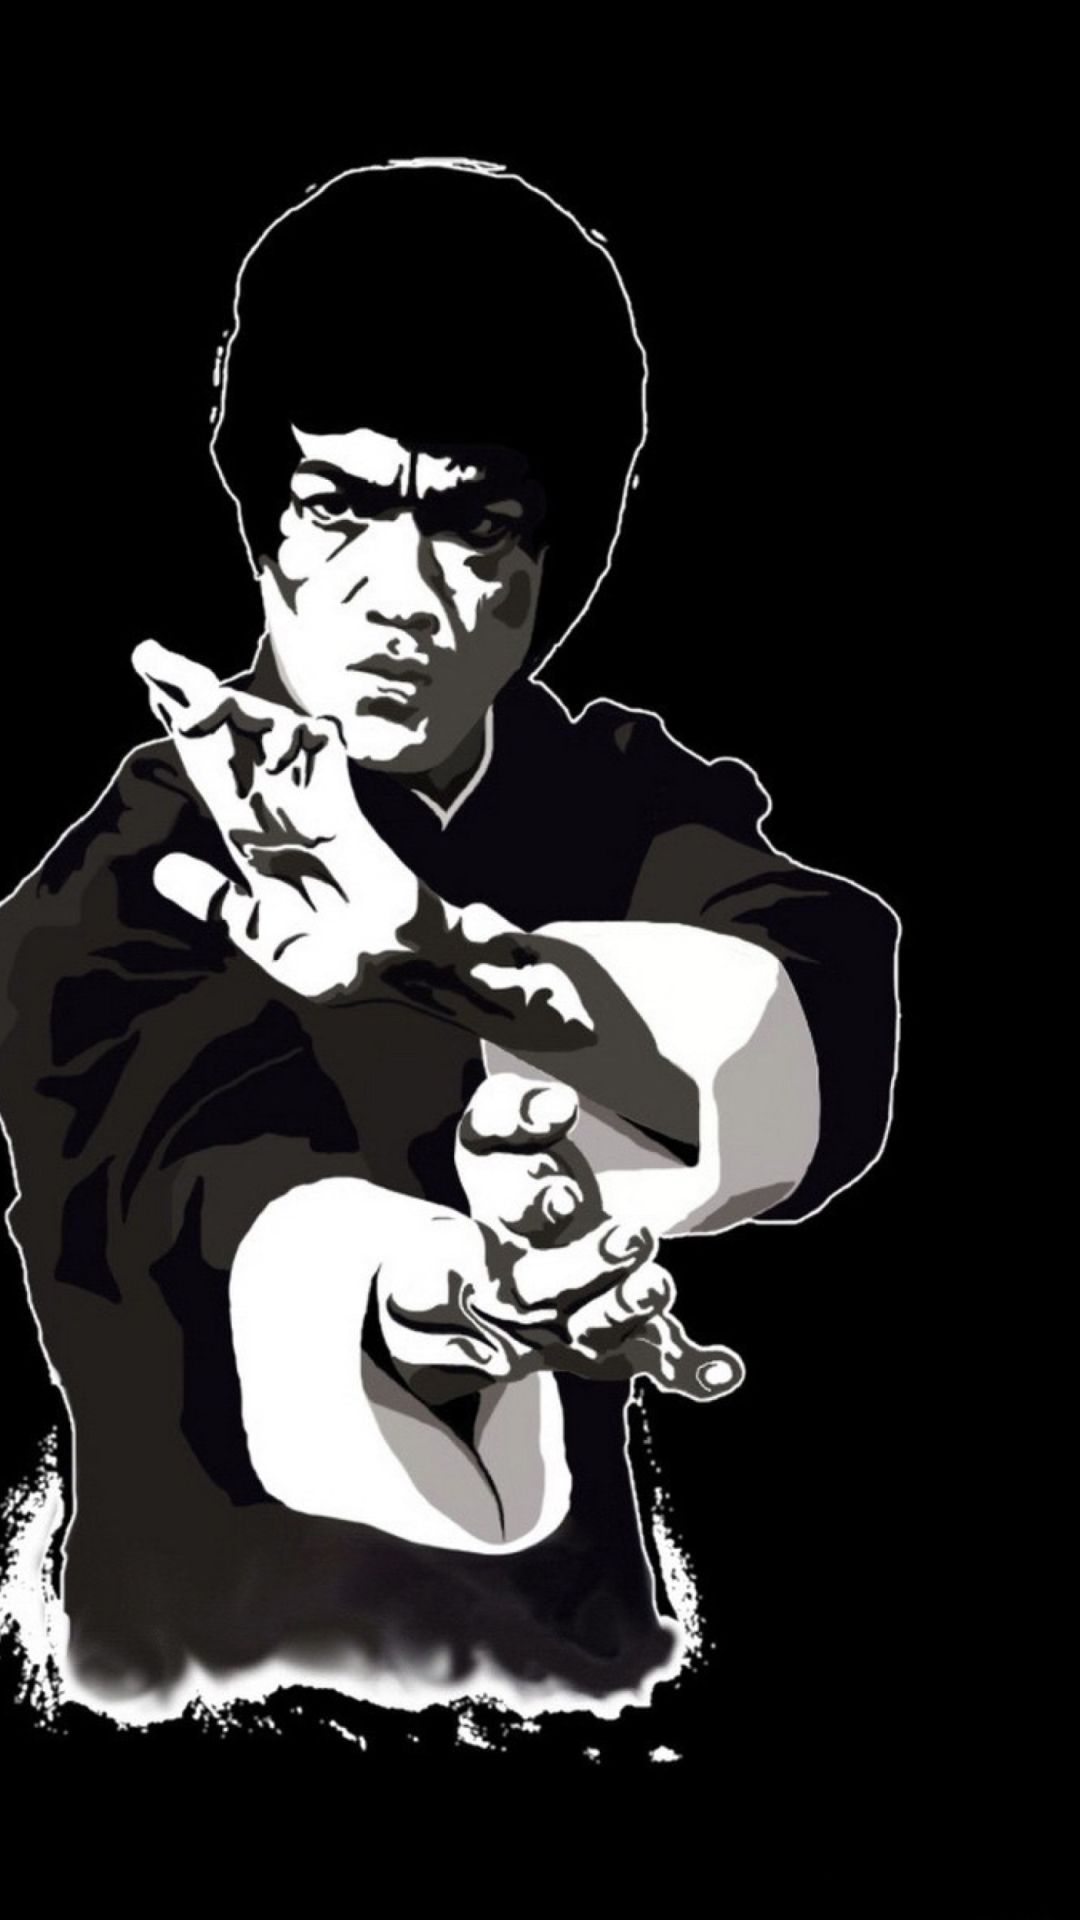 Bruce Lee wallpaper by rrk5rsrap  Download on ZEDGE  a8f4